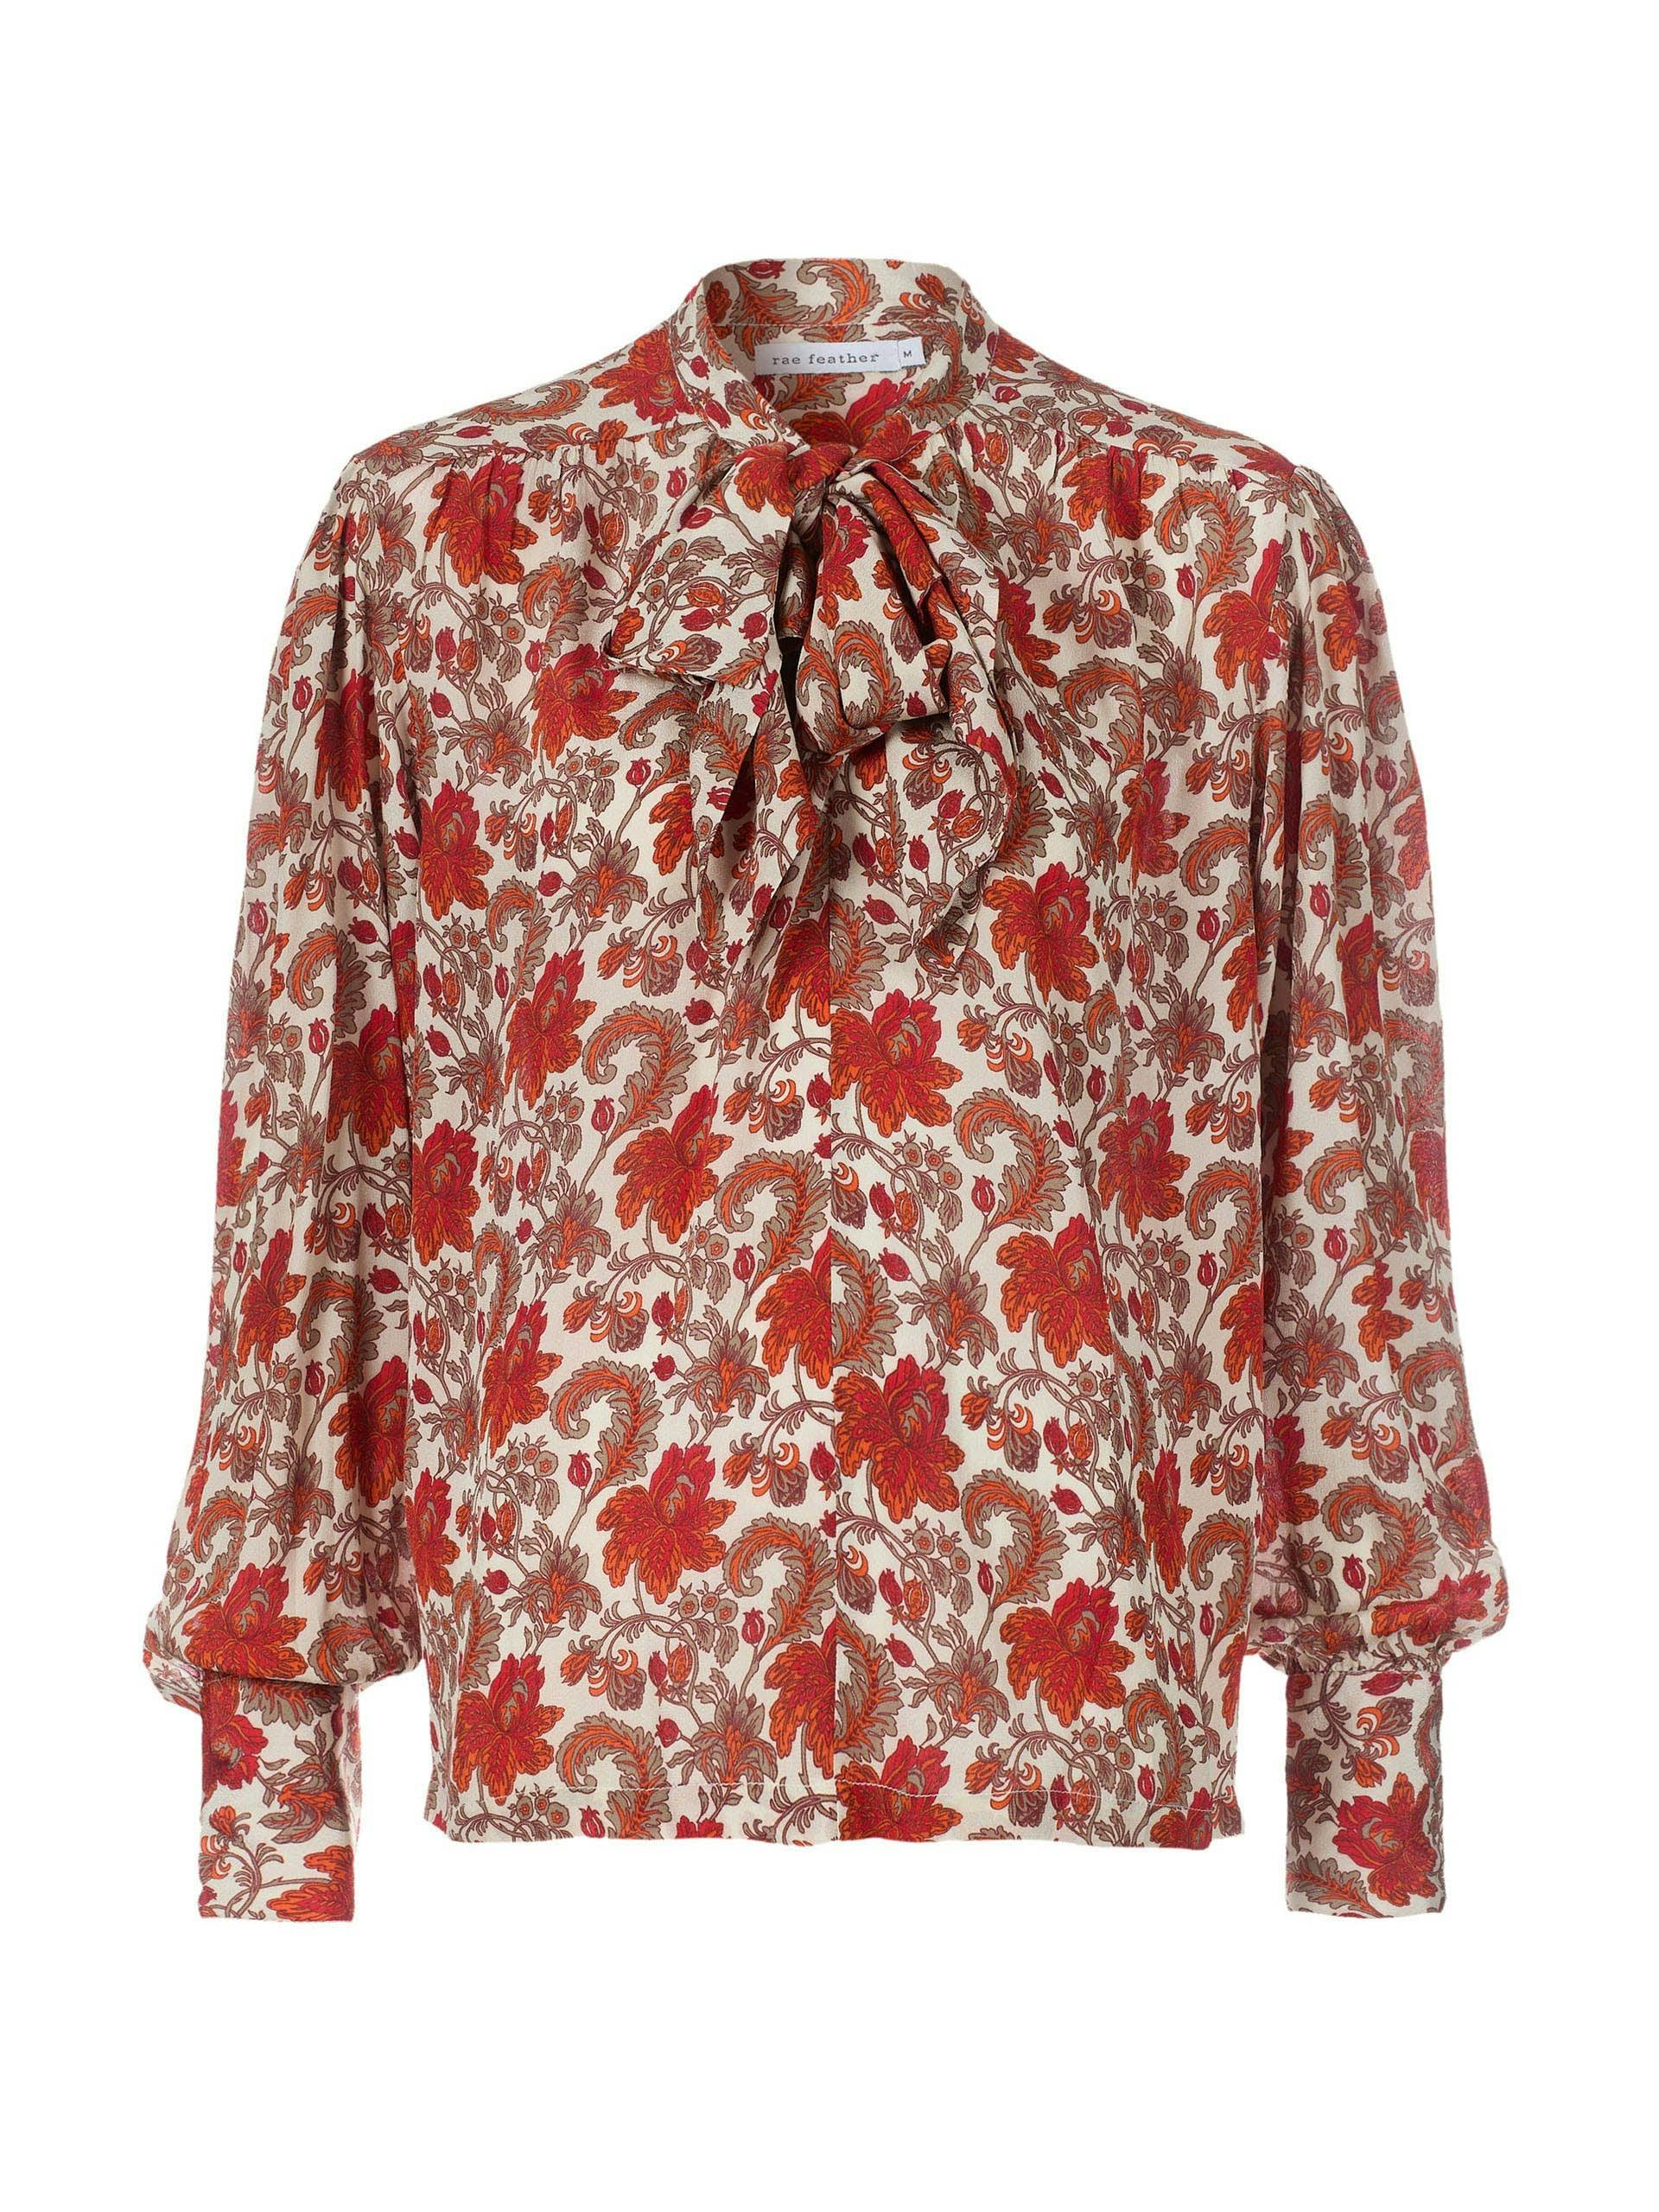 Paisley floral print Helen bow blouse